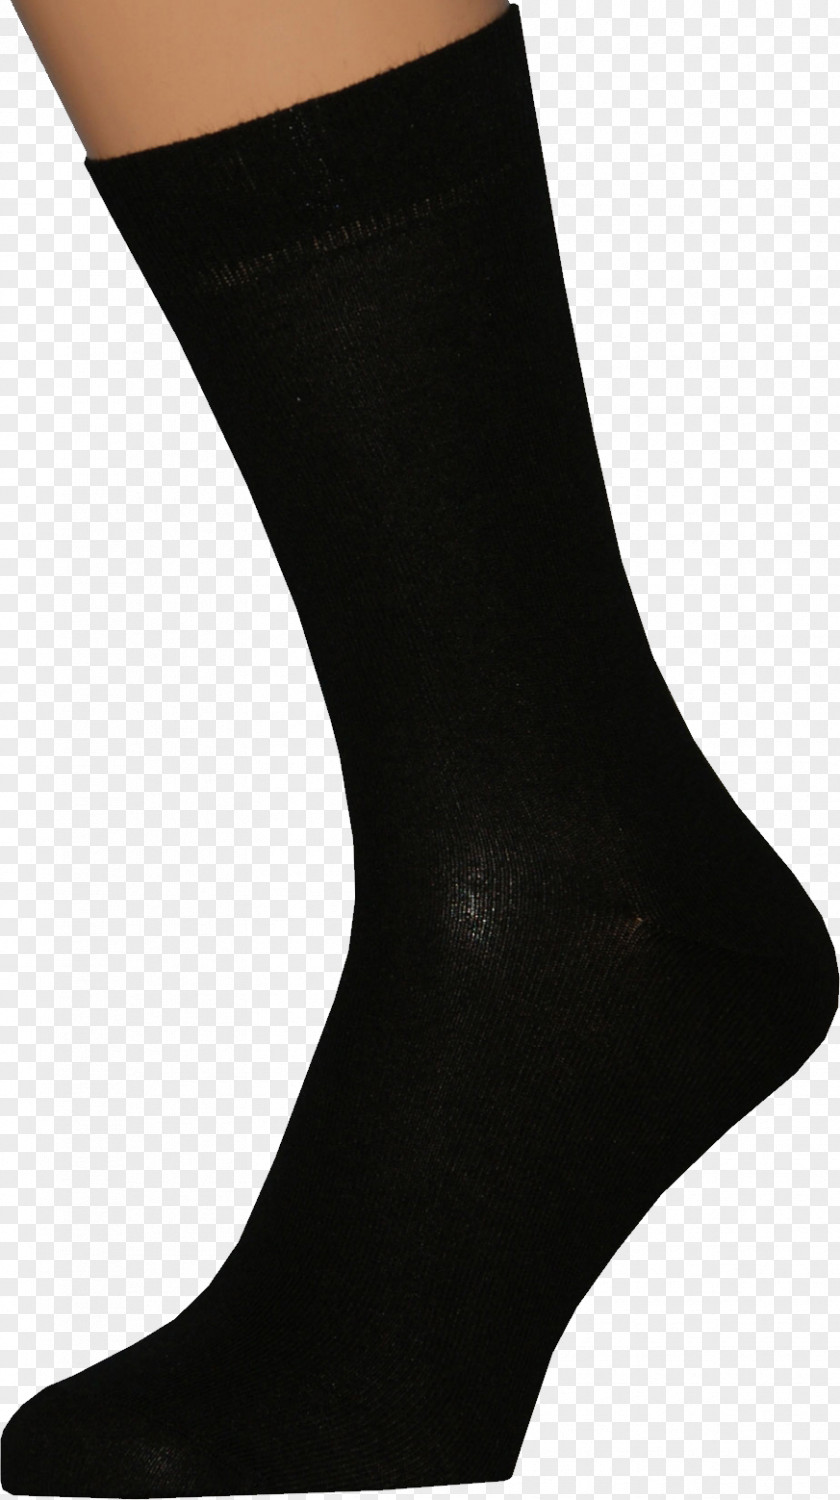 Black Socks Image Christmas Stocking Sock Hosiery PNG